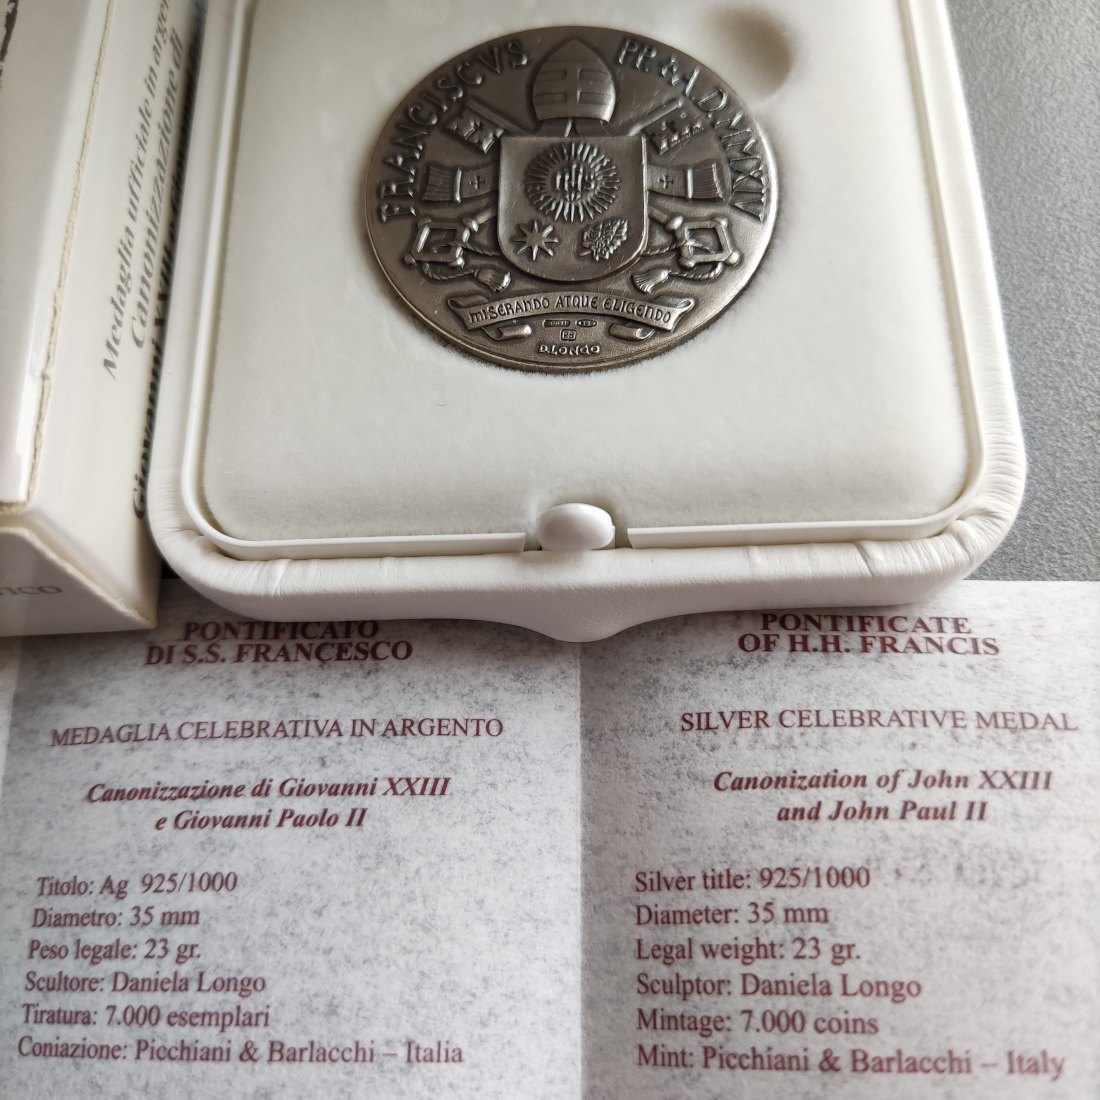  Vatikan 2014 Silber Medaille <i>Heiligsprechung Papst Johannes Paul II. und Johannes XXIII.</i>   